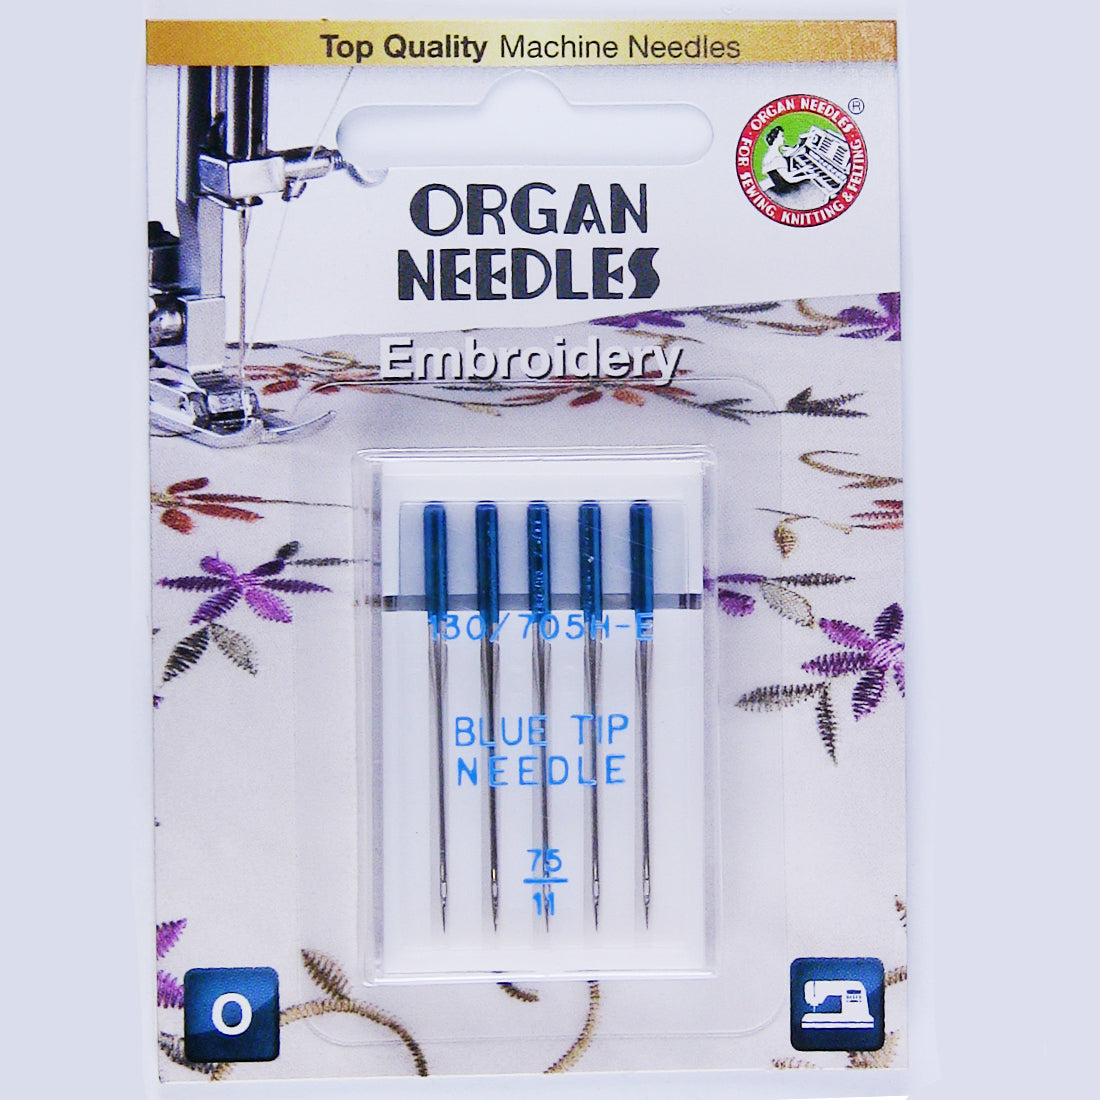 Organ Needle 75/11 PD 15x1 ST Embroidery Machine Needles (10